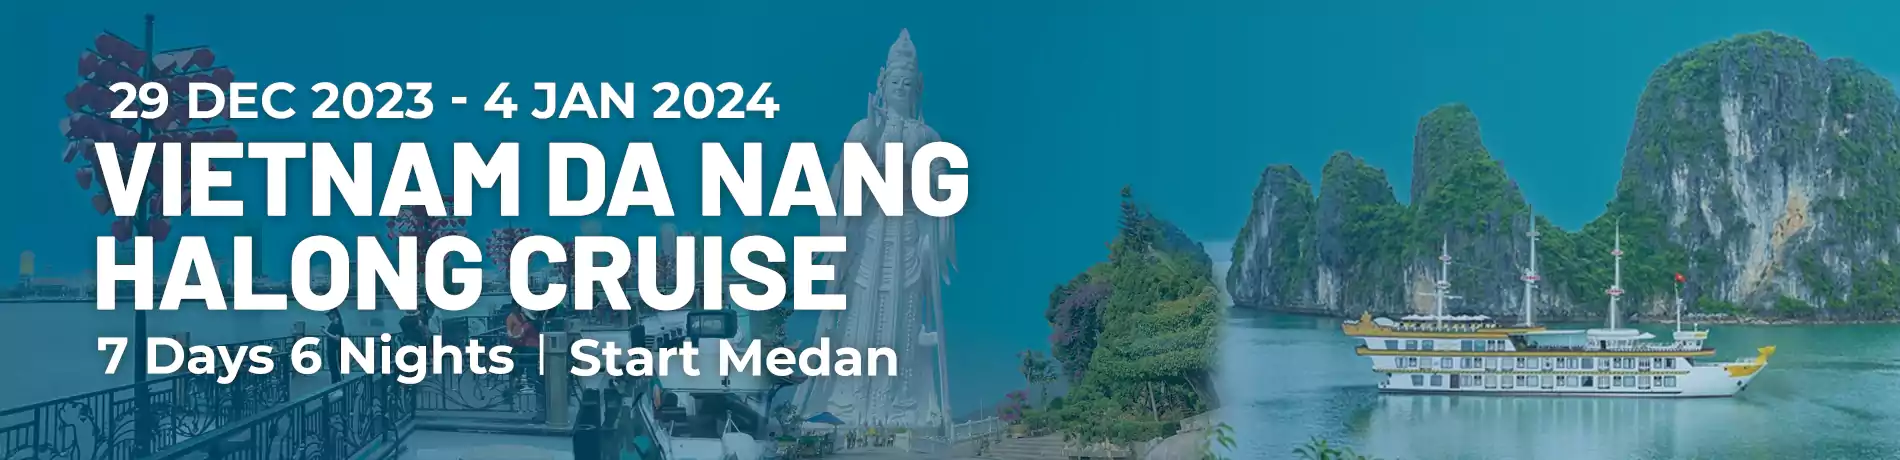 Tour Vietnam Da Nang Halong Bay Cruise 29 Dec 23